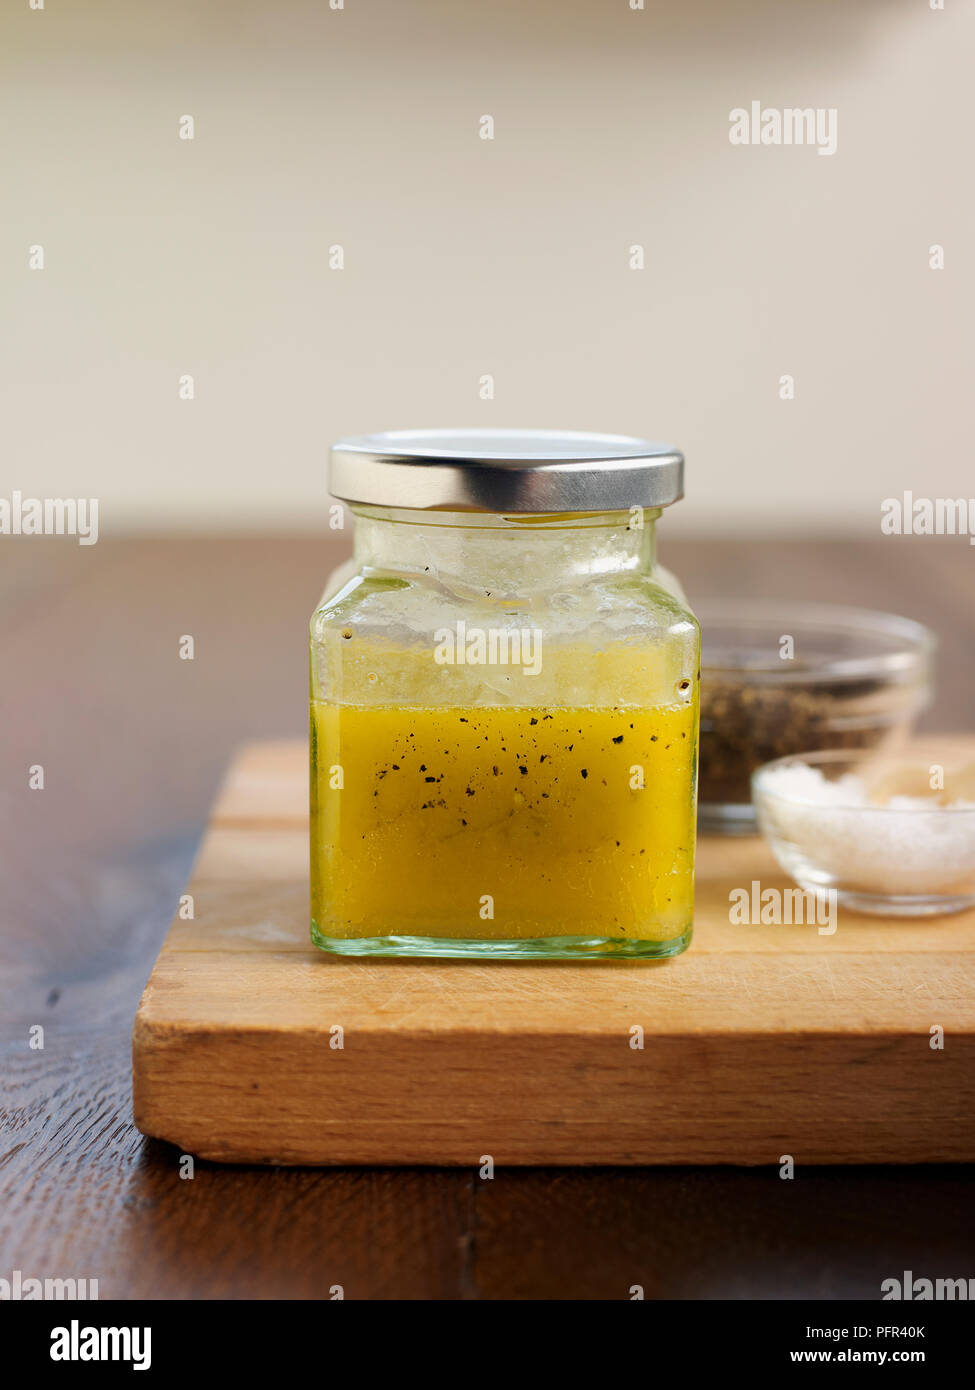 Jar of home-made vinaigrette sauce Stock Photo